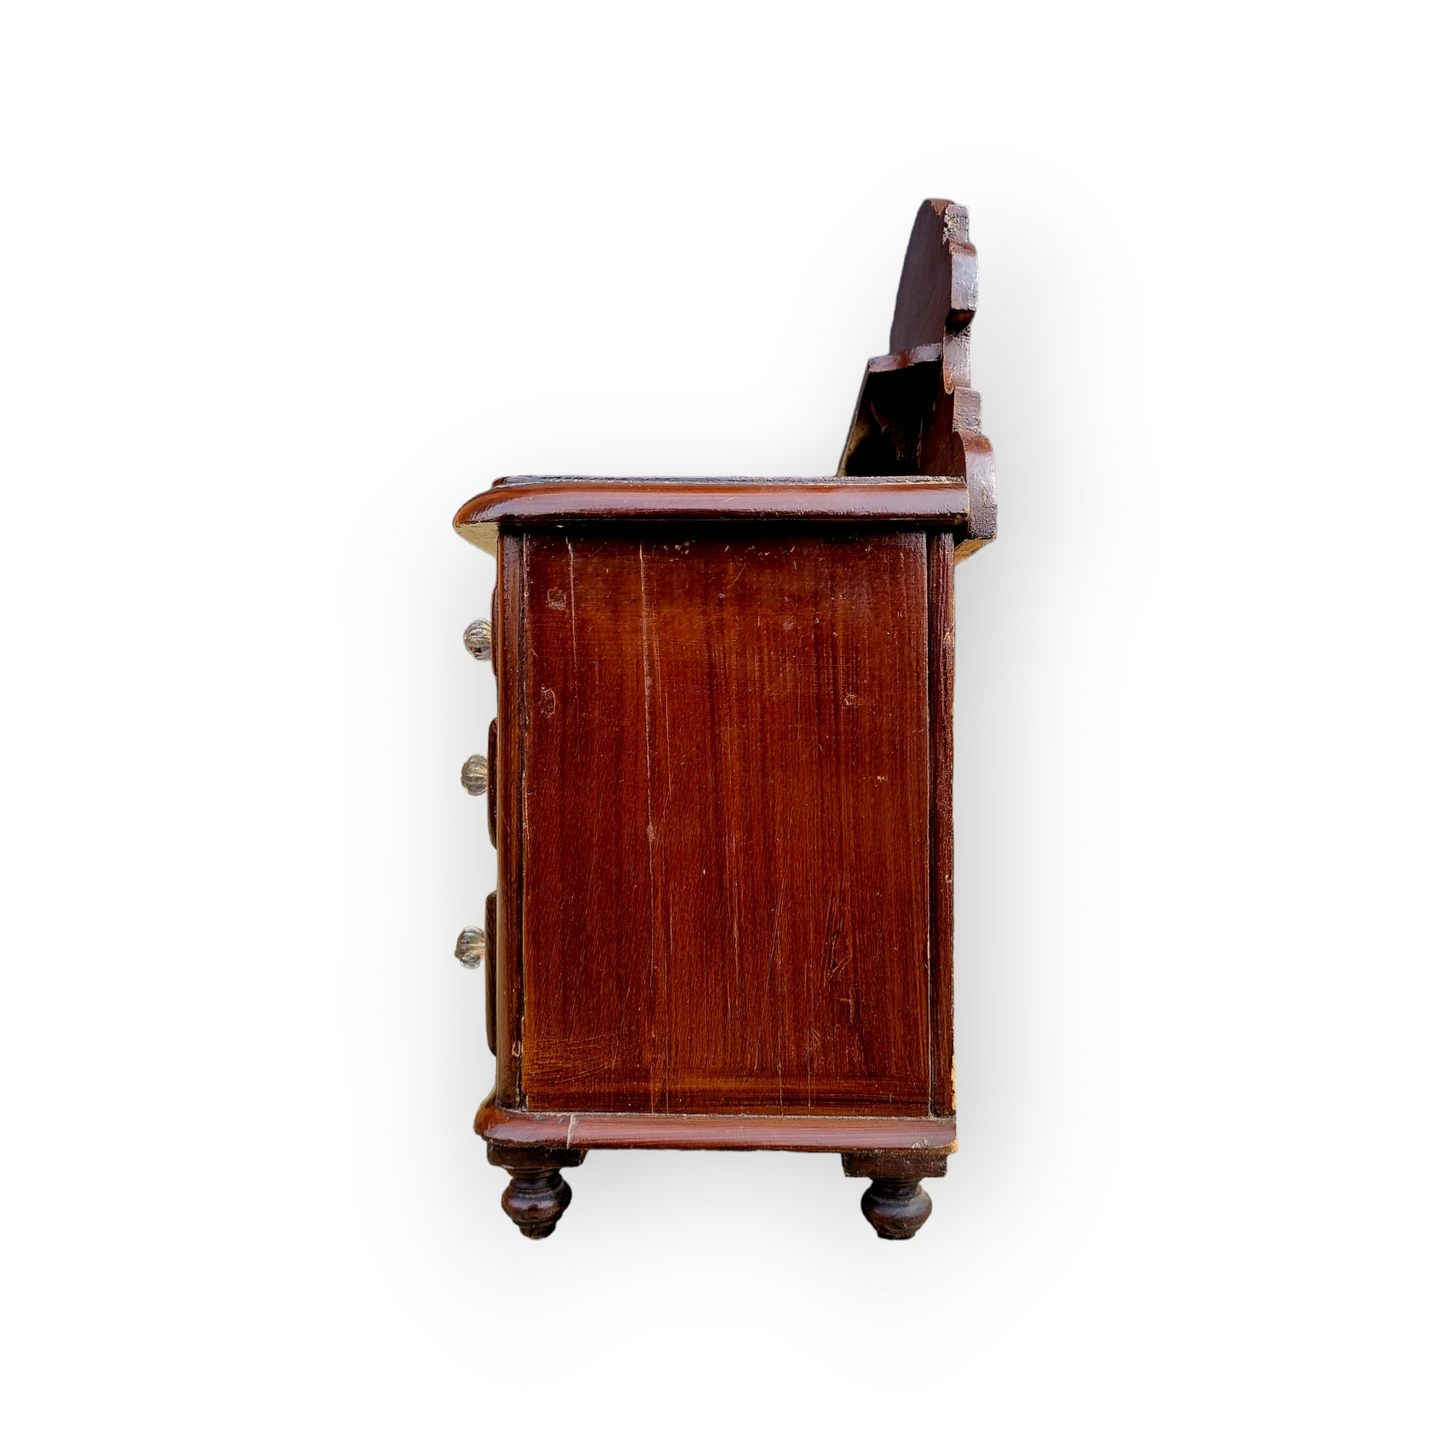 An Apprentice Piece - A 19th Century English Antique Miniature Dresser, Circa 1890